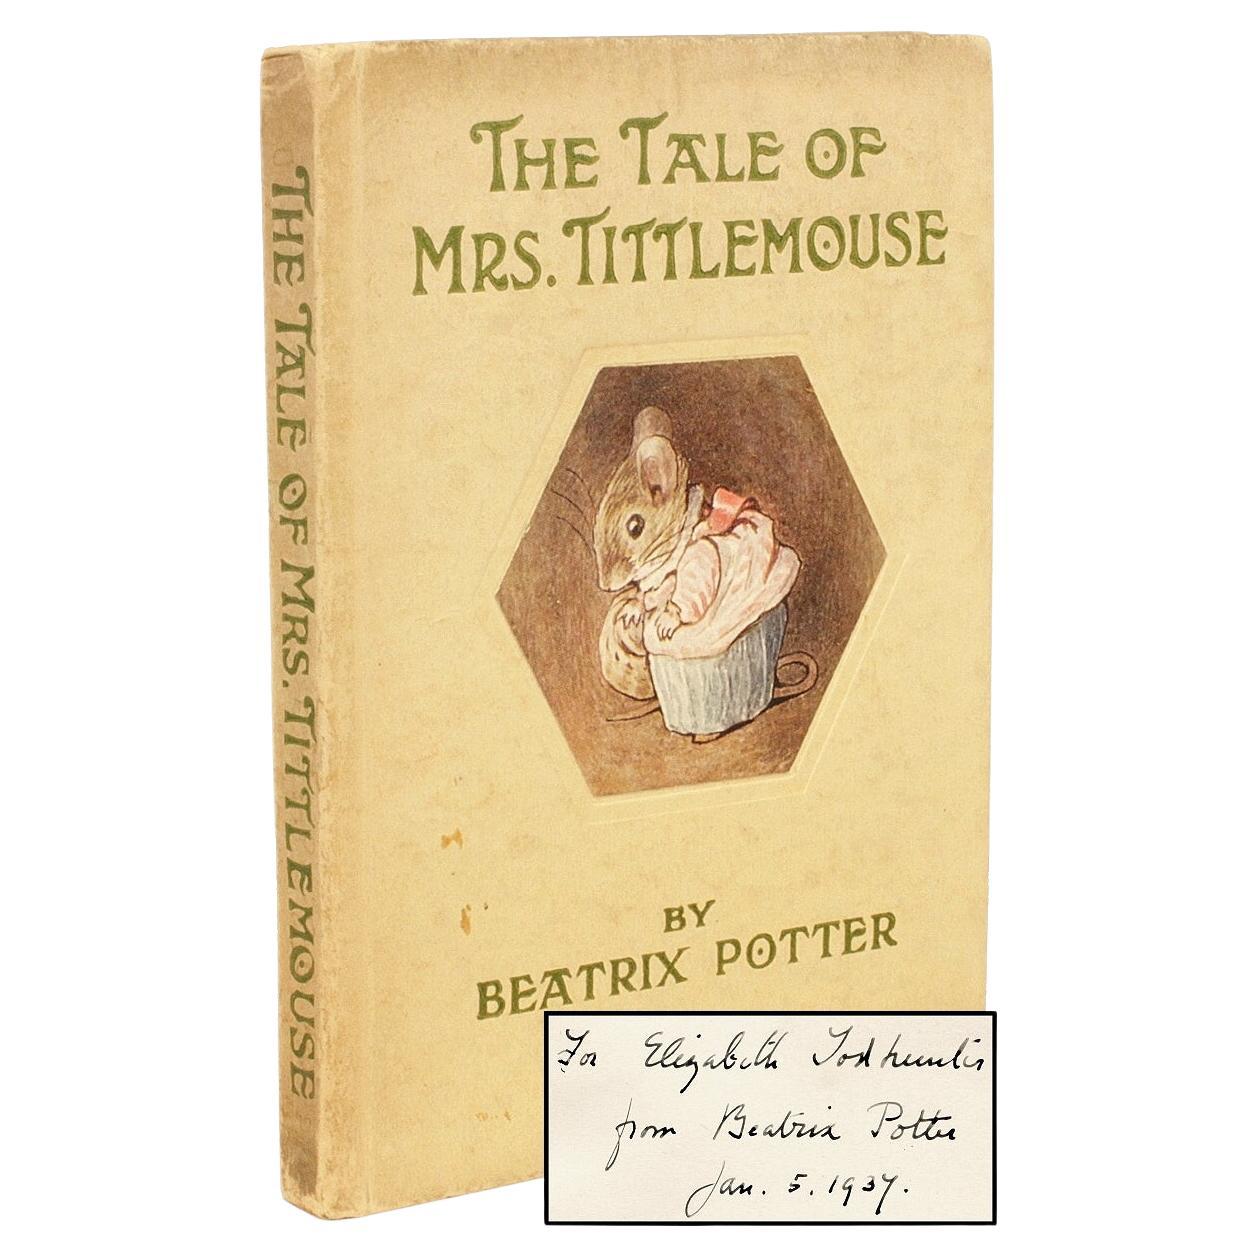 Beatrix Potter, The Tale of Mrs. Tittlemouse, Presentation Copy